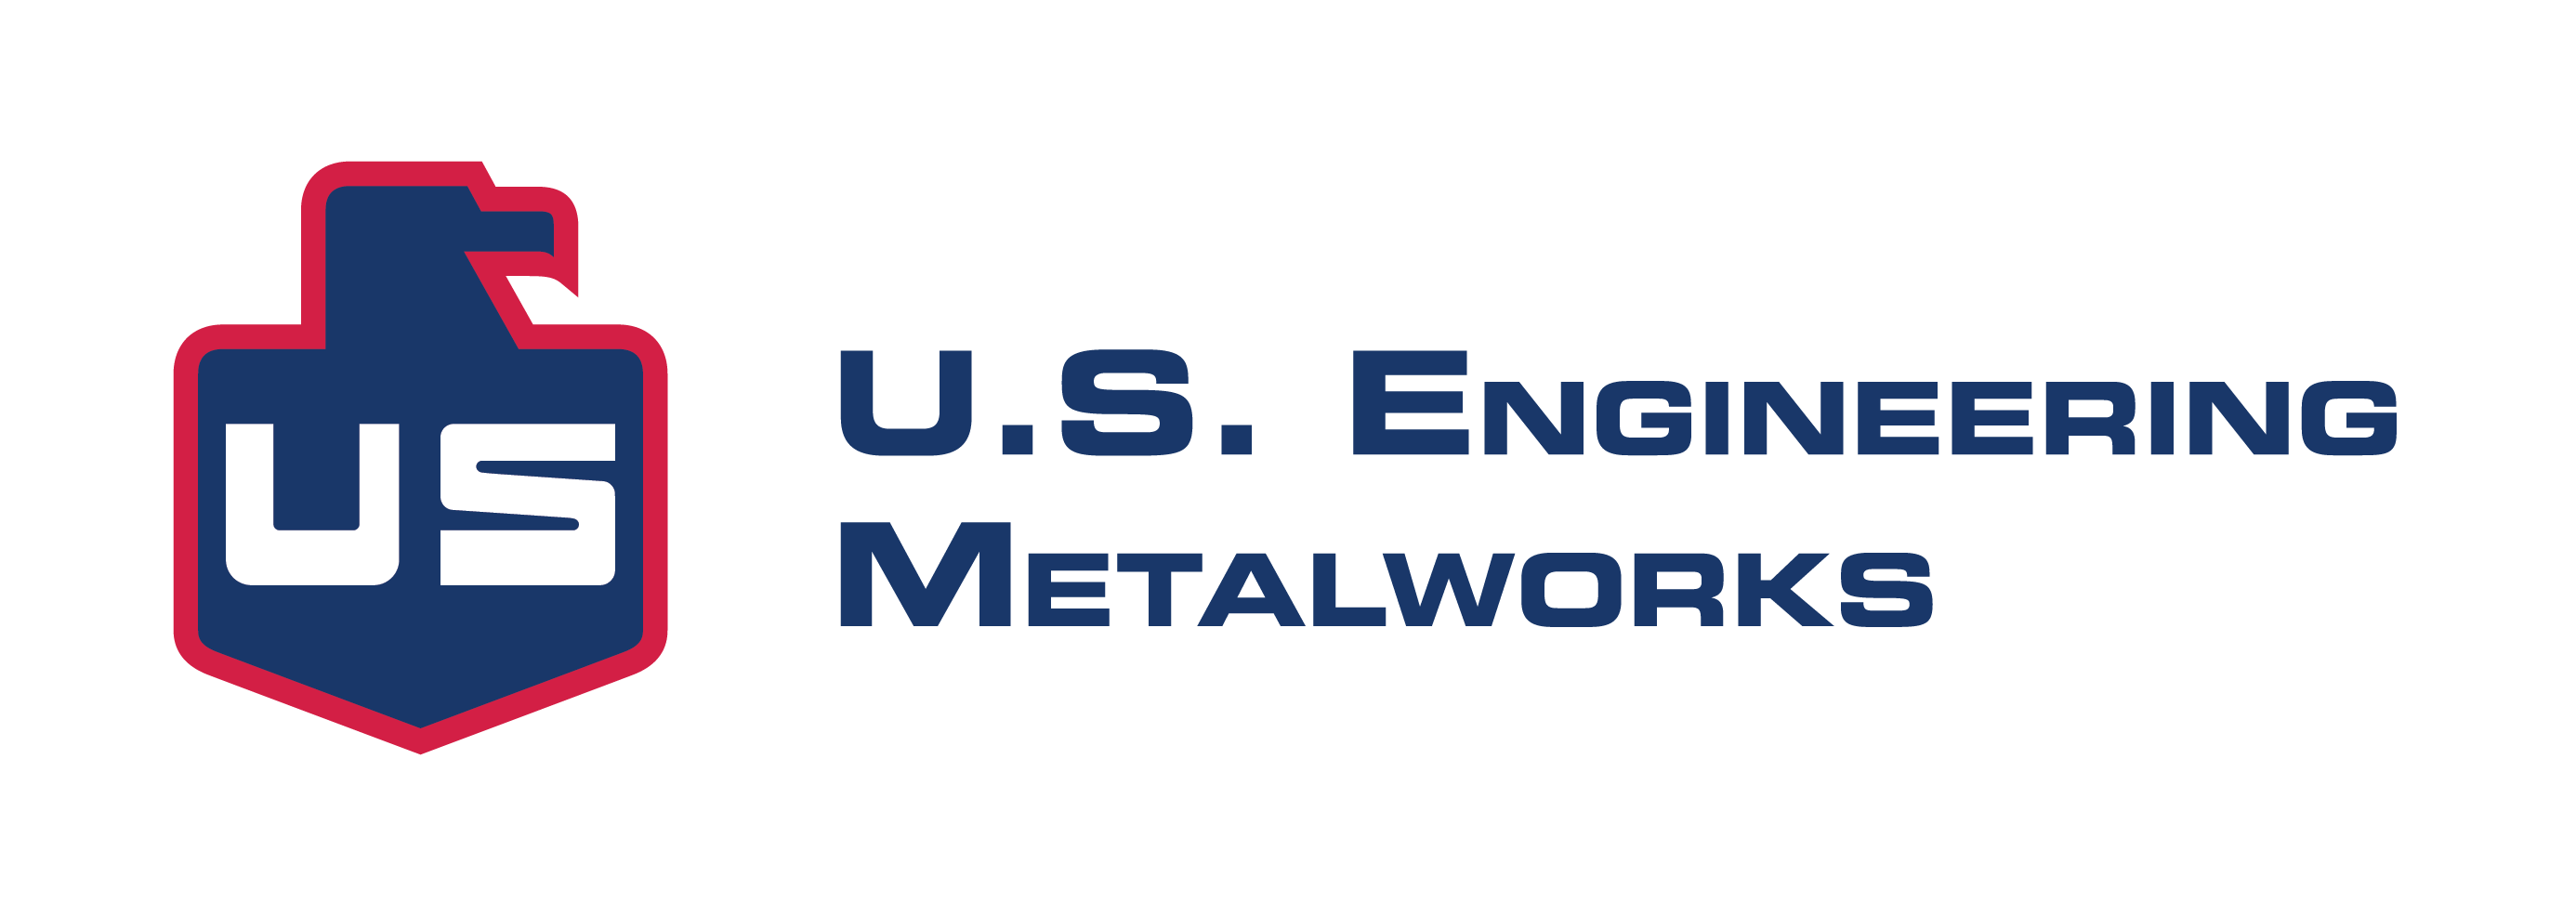 US Metalworks Engineering Logo 2019_horizontal